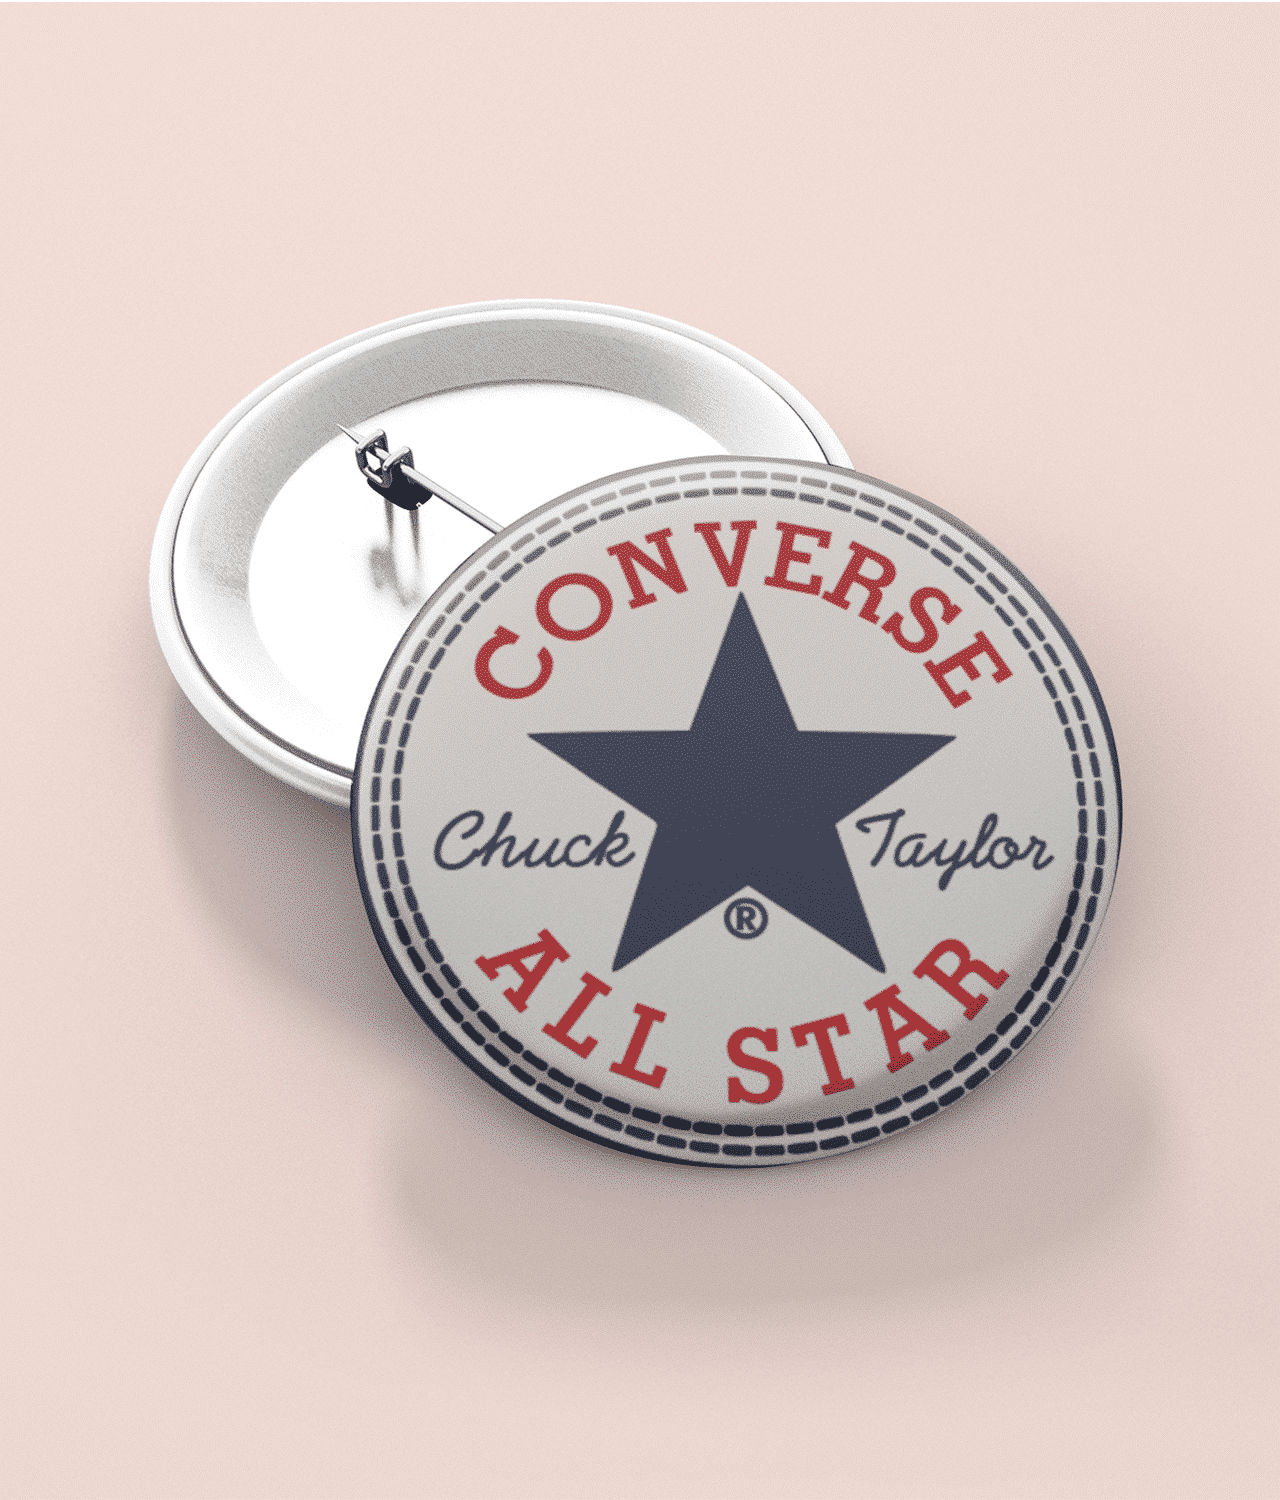 Converse Pin / Fridge Magnet